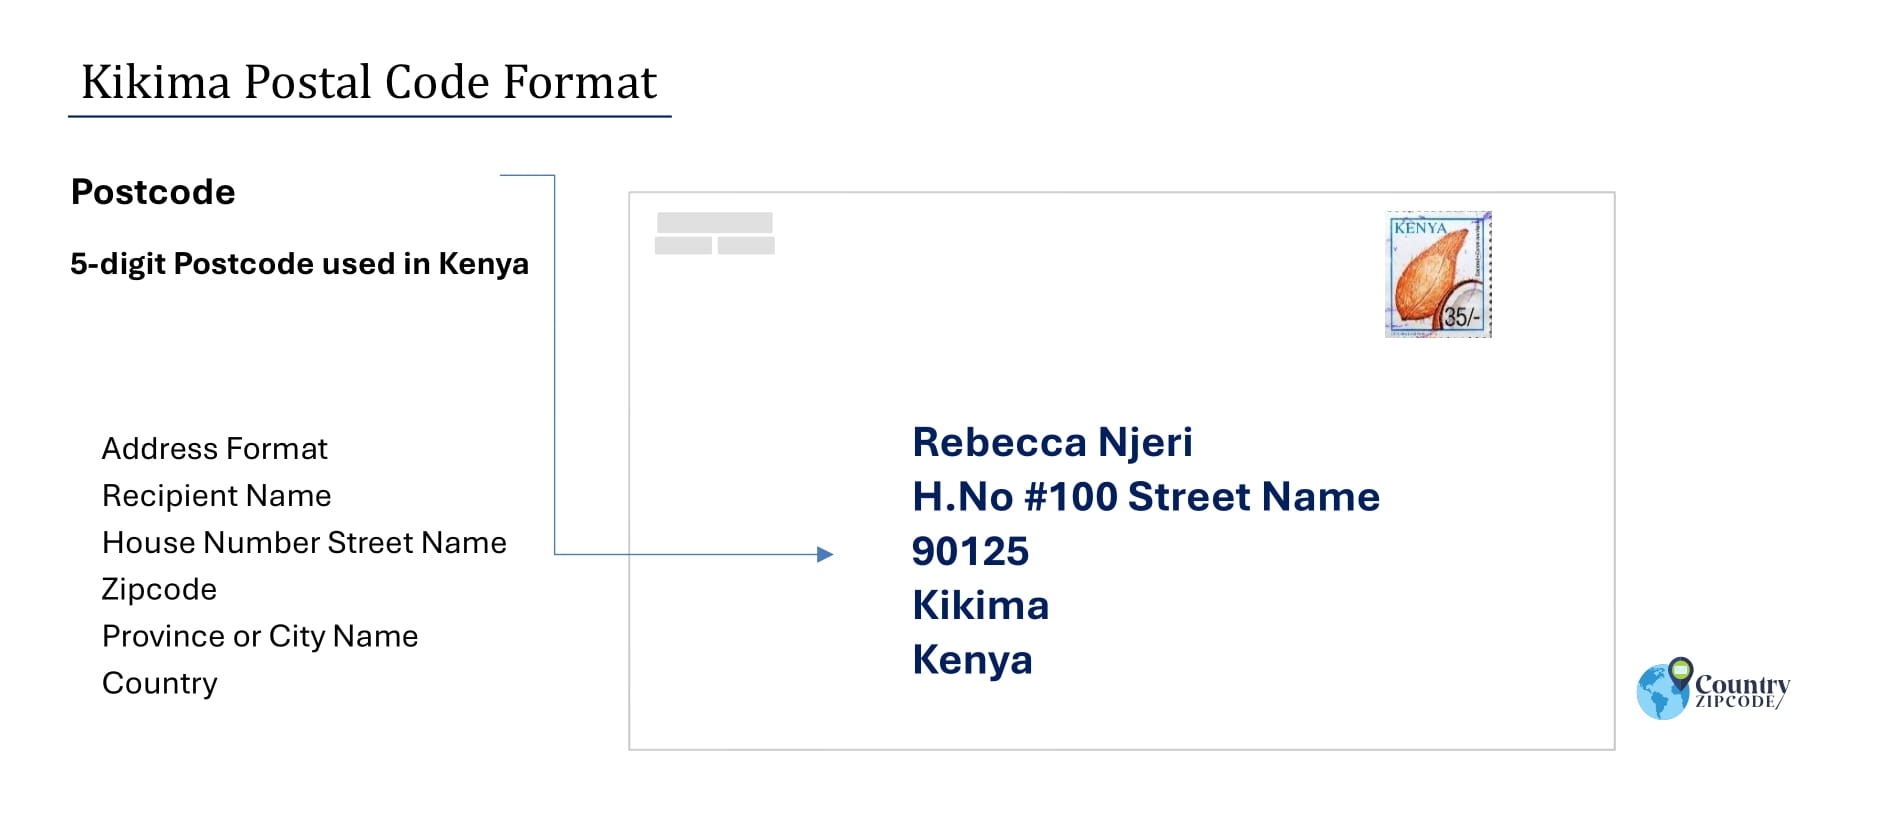 Example of Kikima Address and postal code format